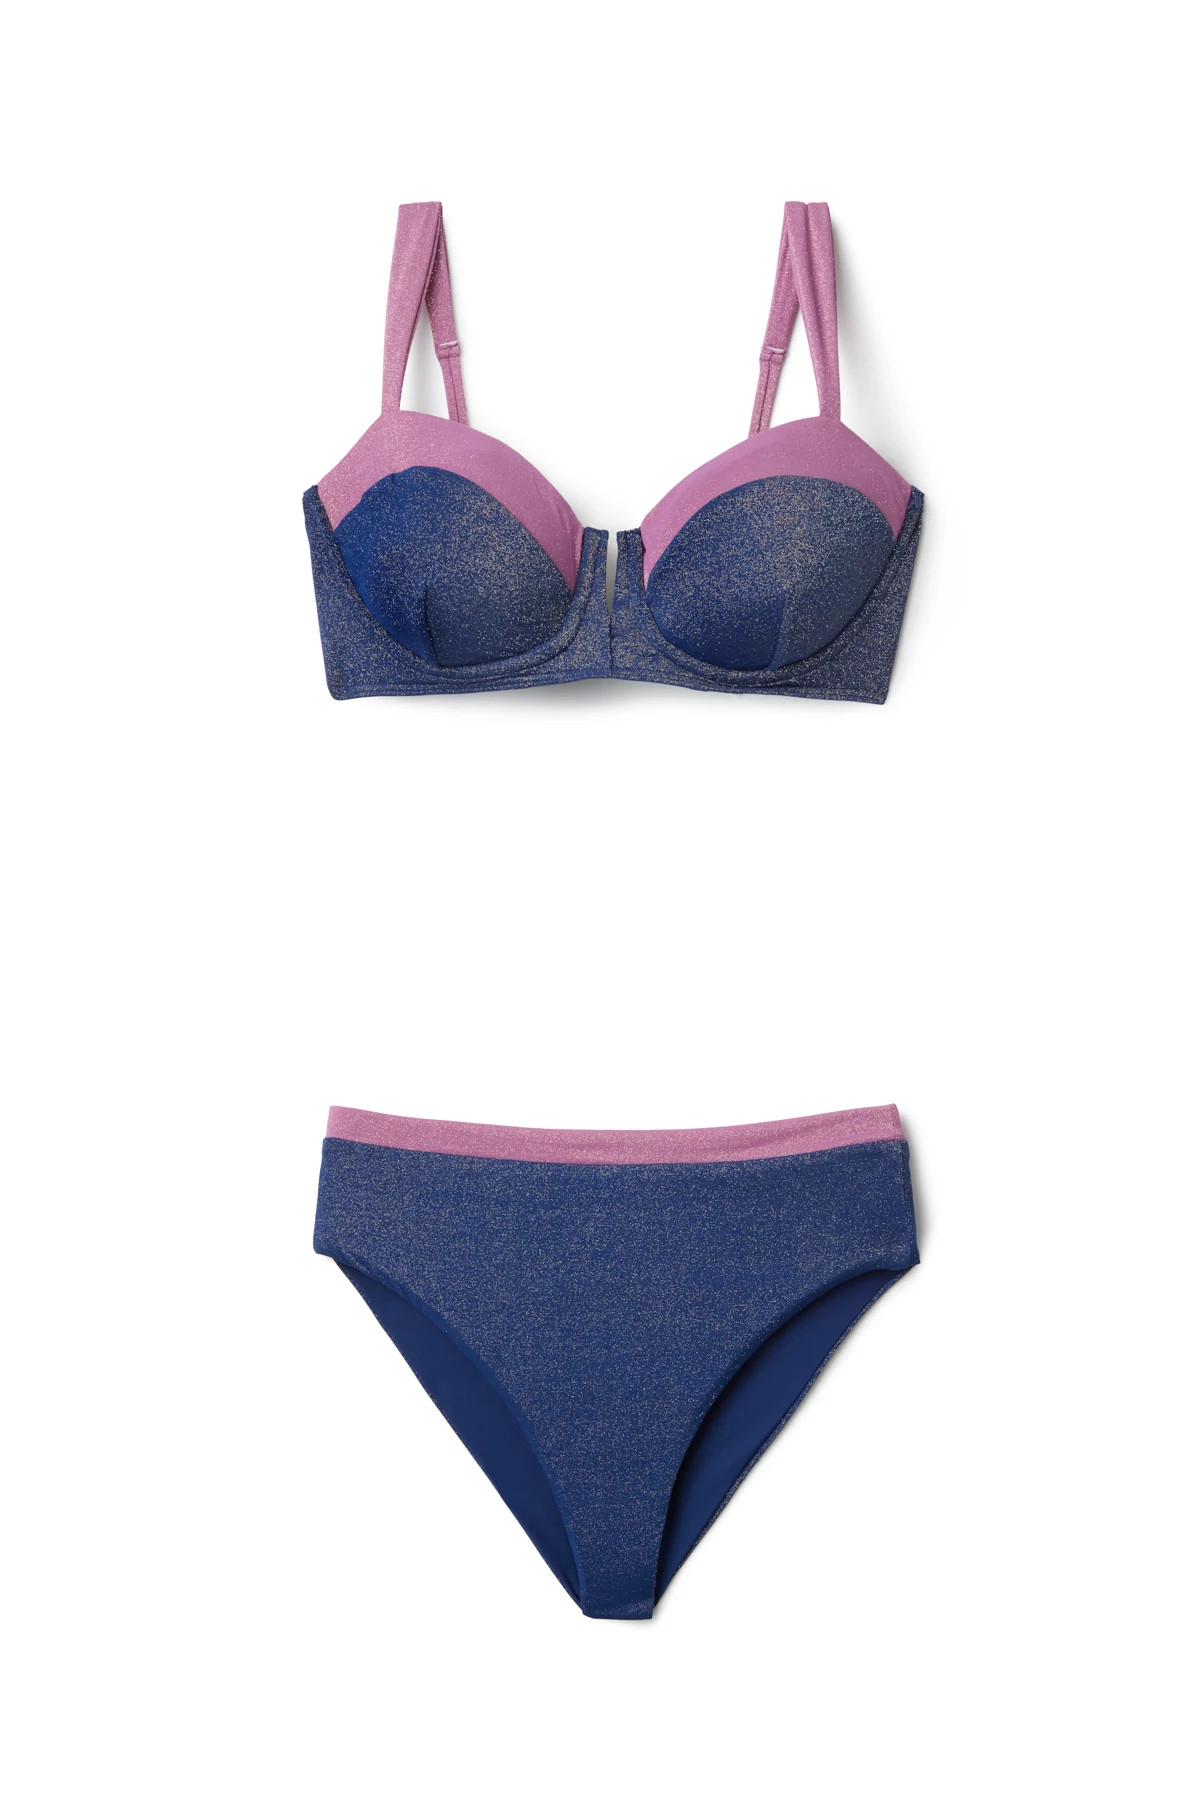 NAVY SHIMMER Jackie Shimmer High Waist Bikini Bottom image number 3